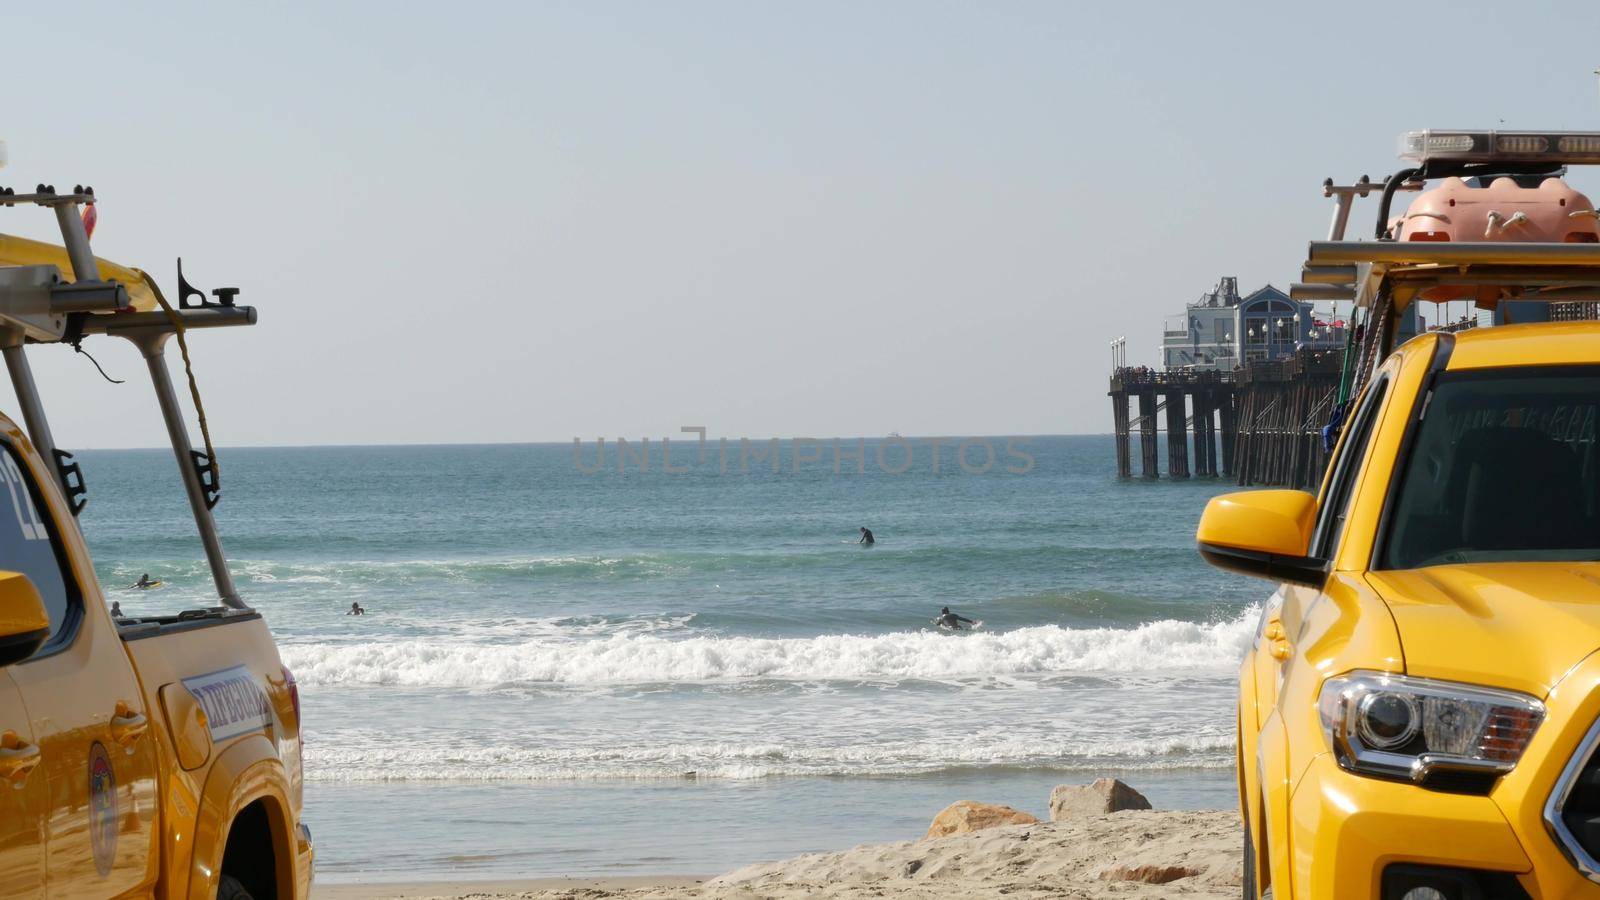 Oceanside, California USA - 8 Feb 2020: Yellow lifeguard car, beach near Los Angeles. Coastline rescue, life guard Toyota pick up truck, lifesavers vehicle. Iconic auto on ocean coast. Public safety.